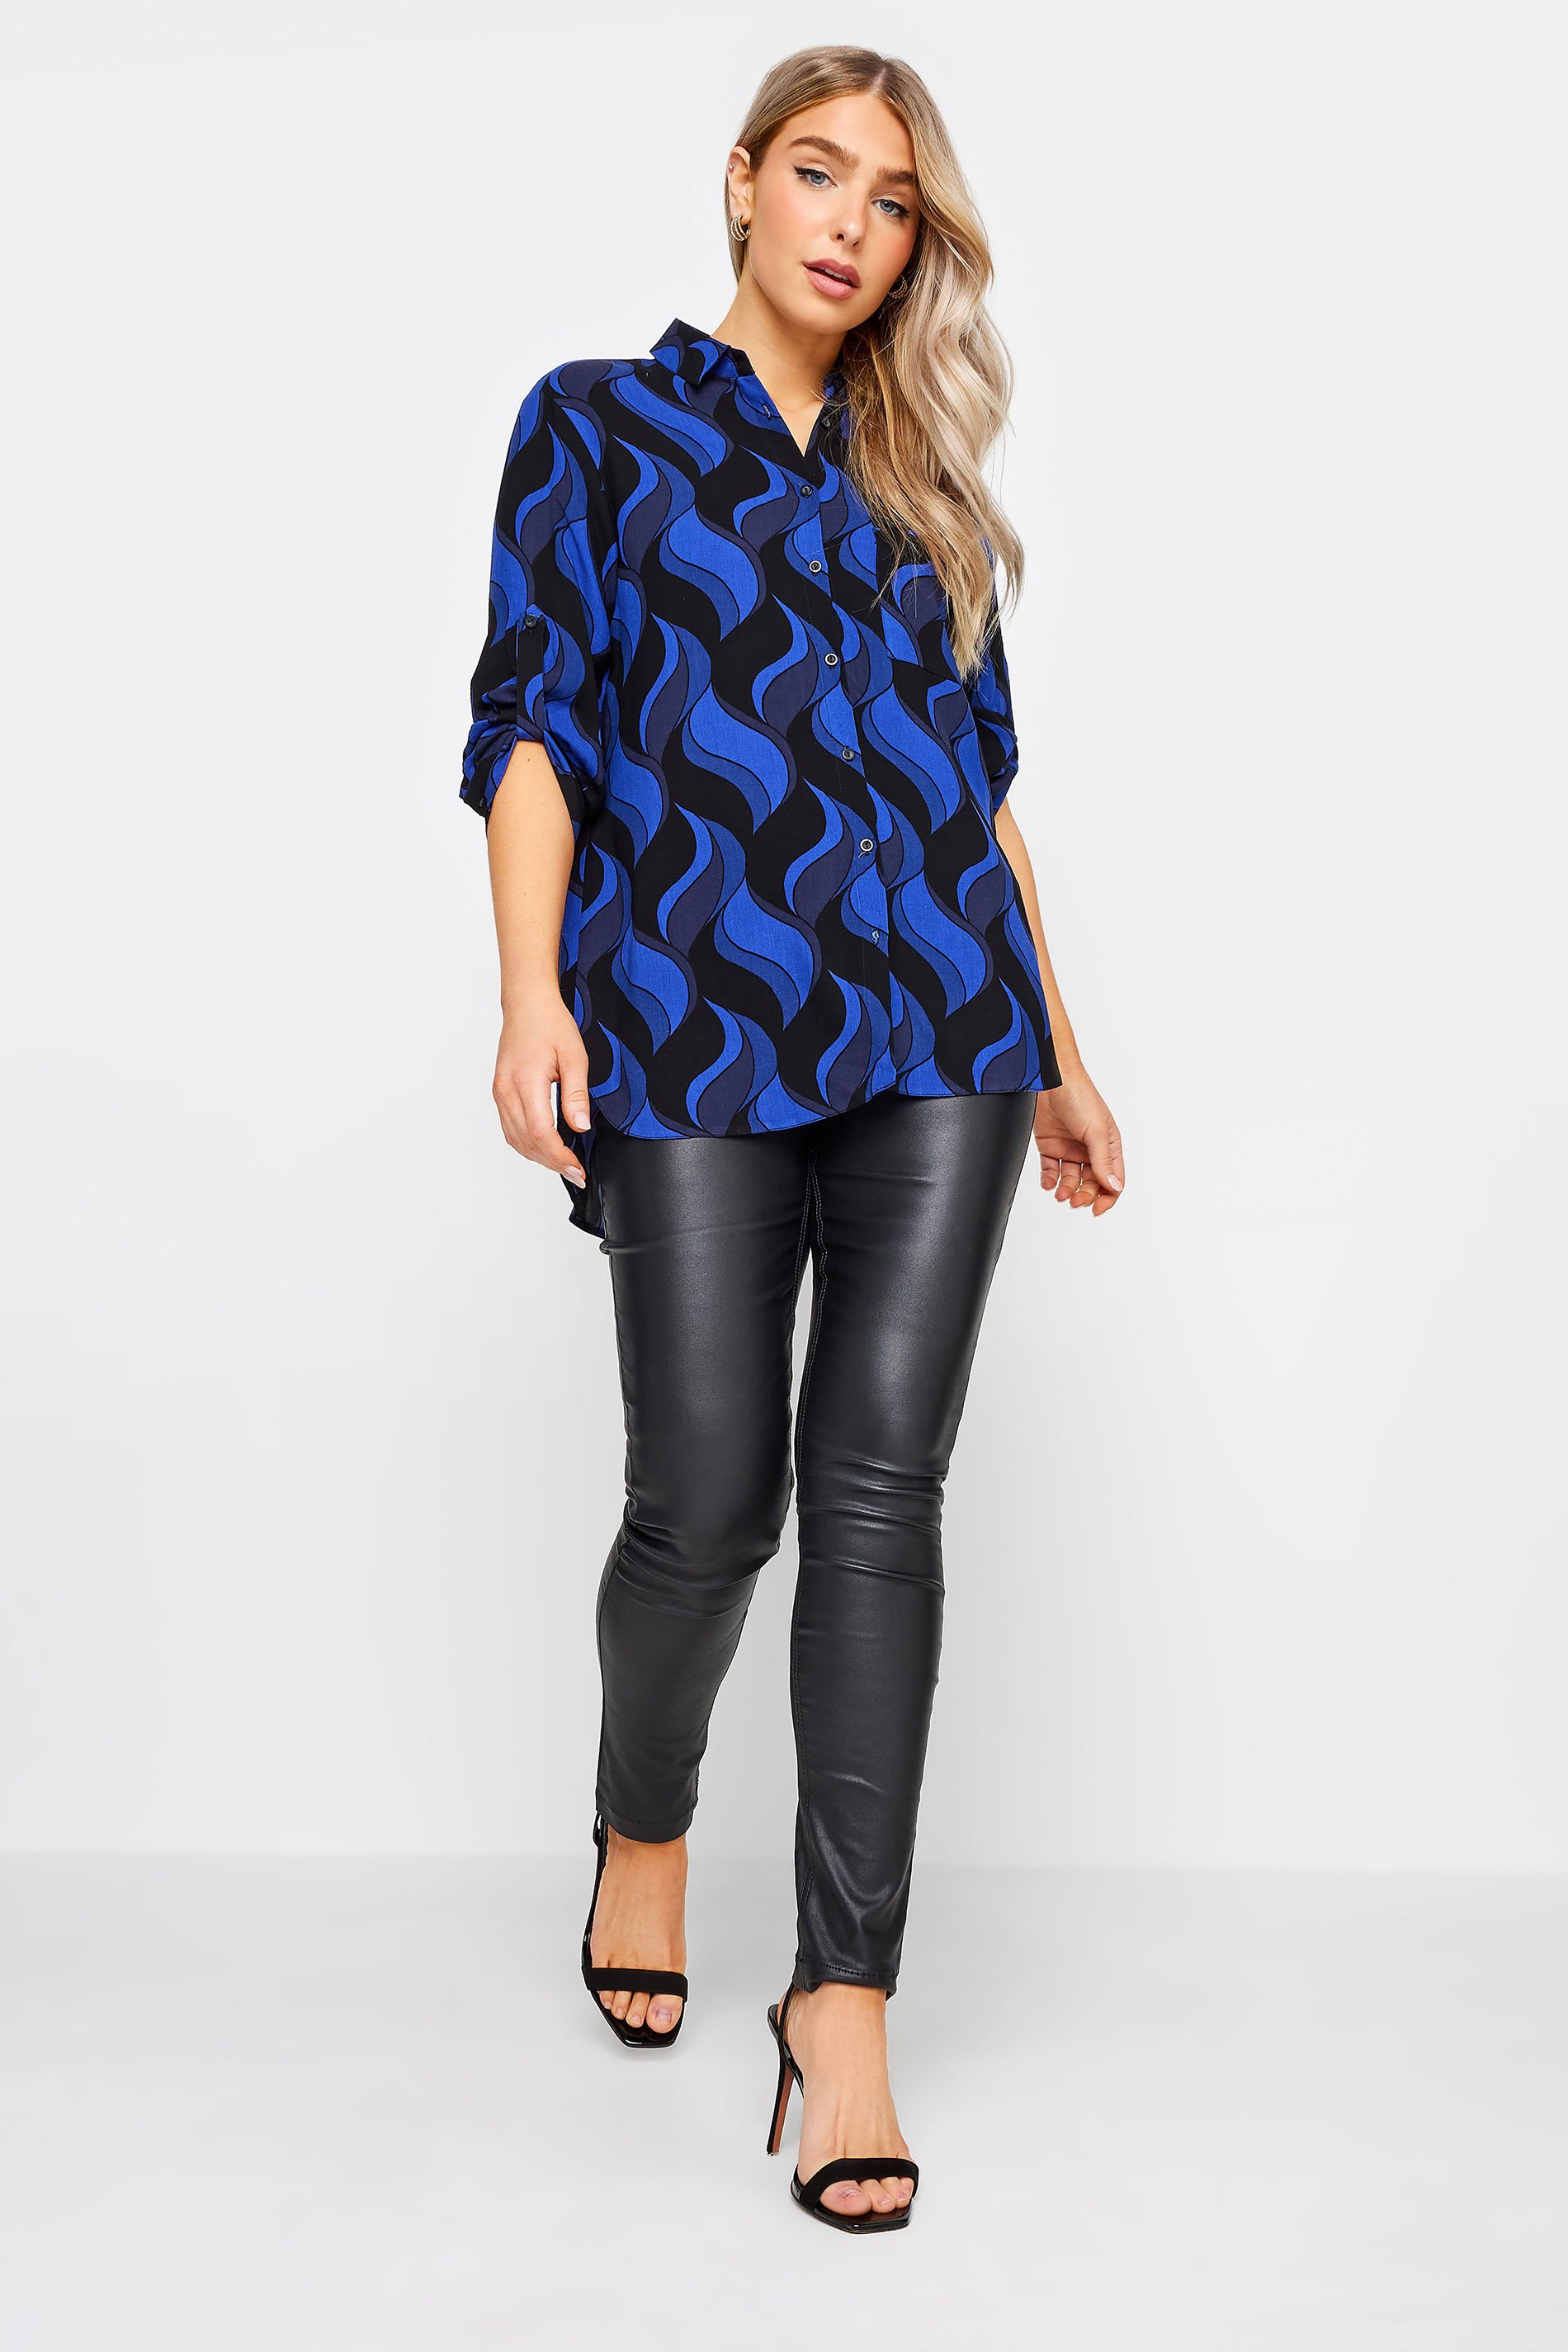 M&Co Black & Blue Swirl Print Tab Sleeve Shirt | M&Co 2